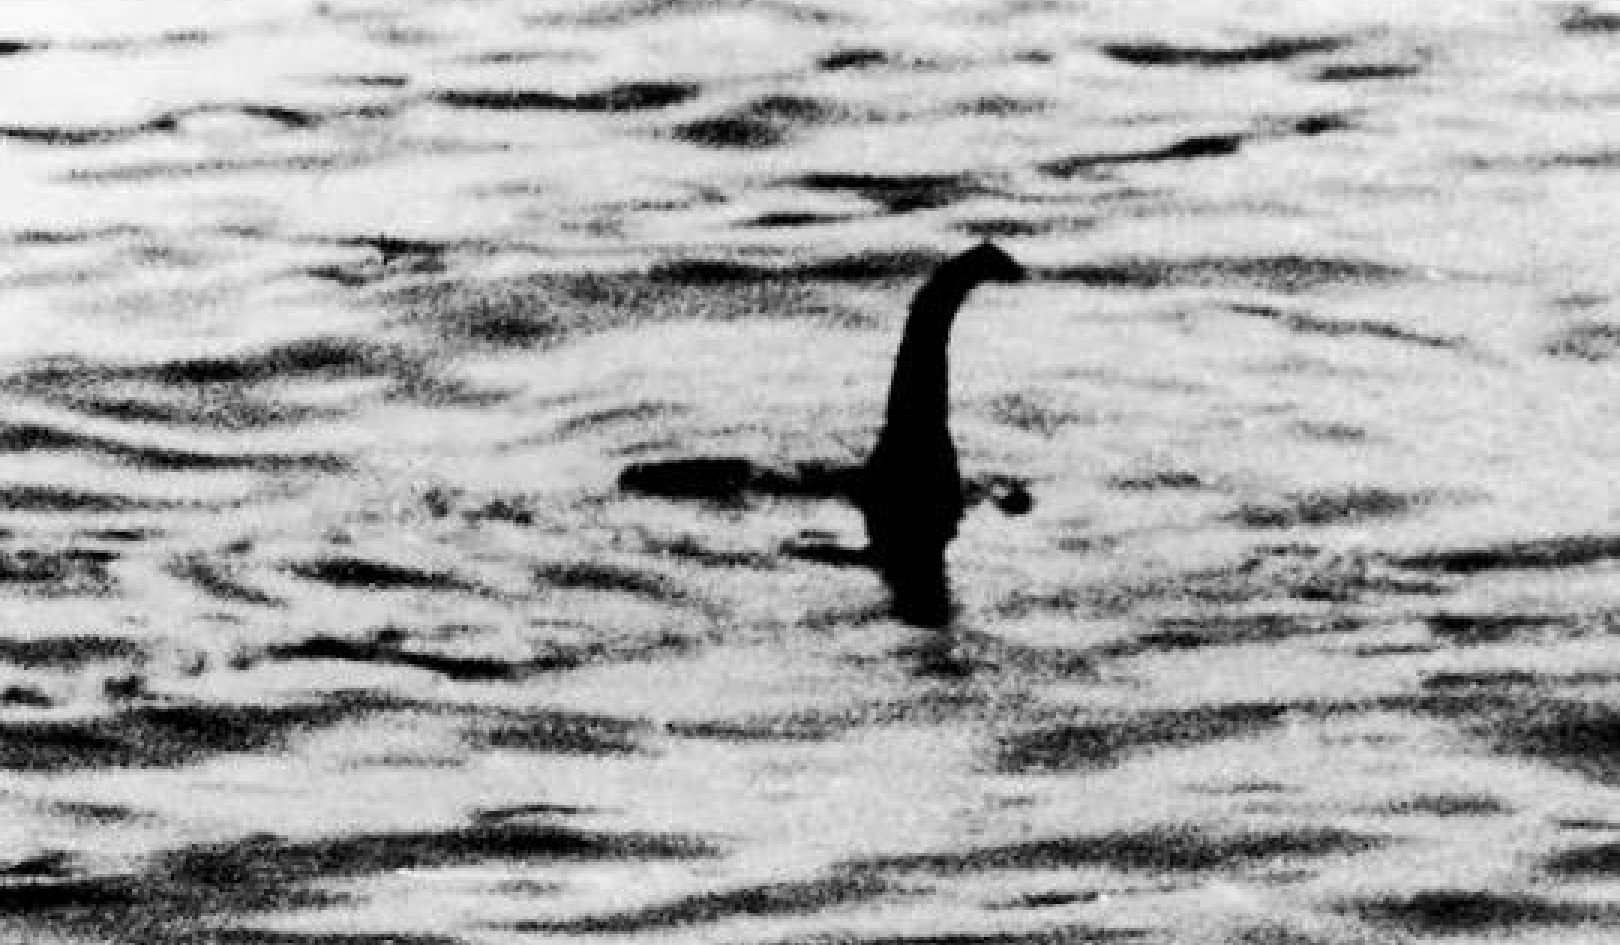 Valódi a Loch Ness-i szörny?